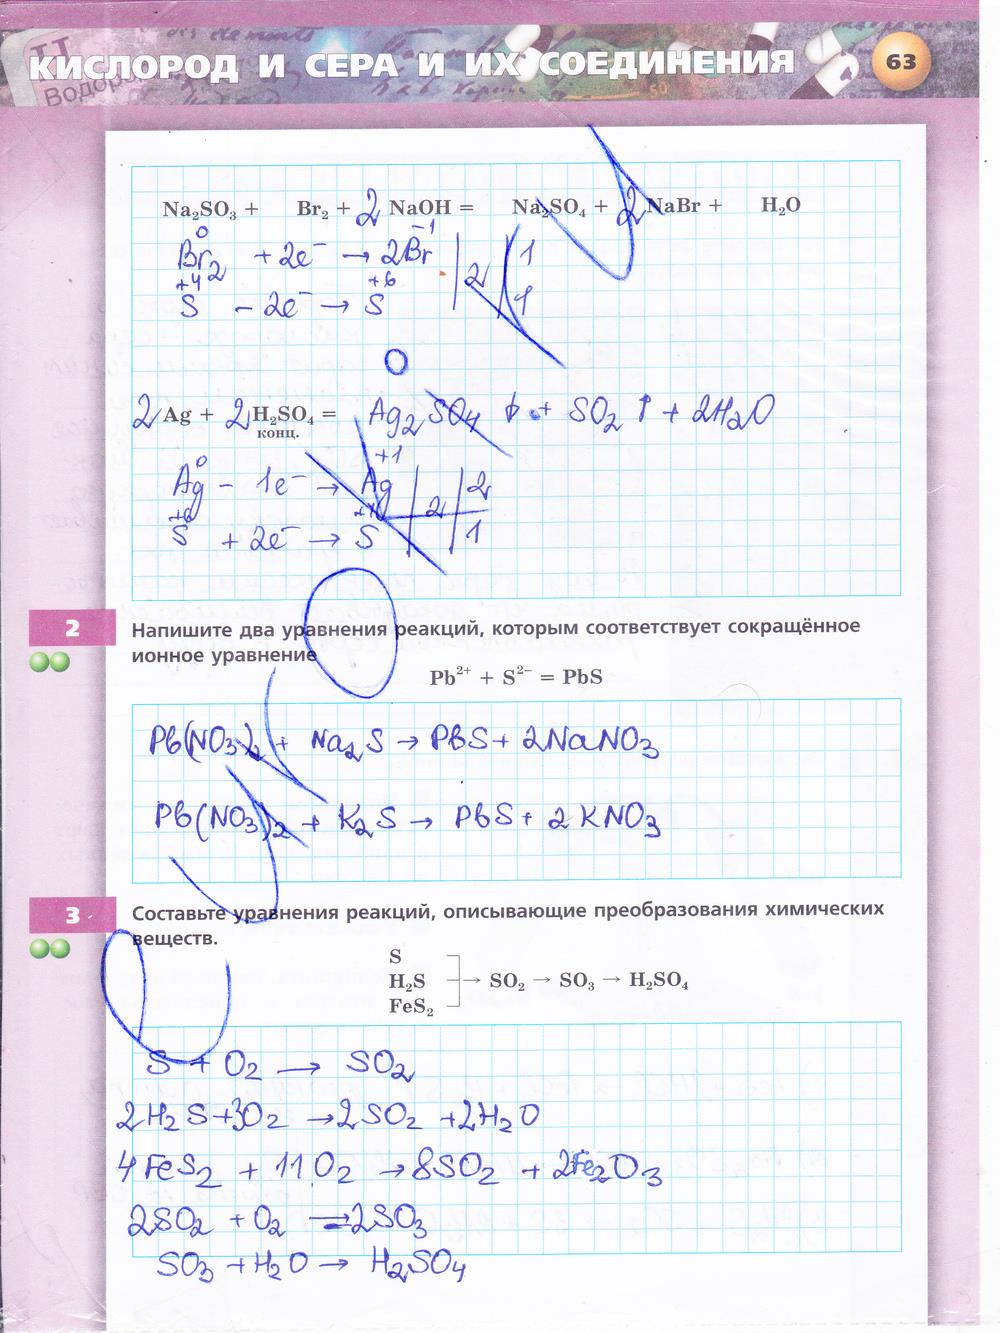 гдз 9 класс тетрадь-тренажёр страница 63 химия Гара